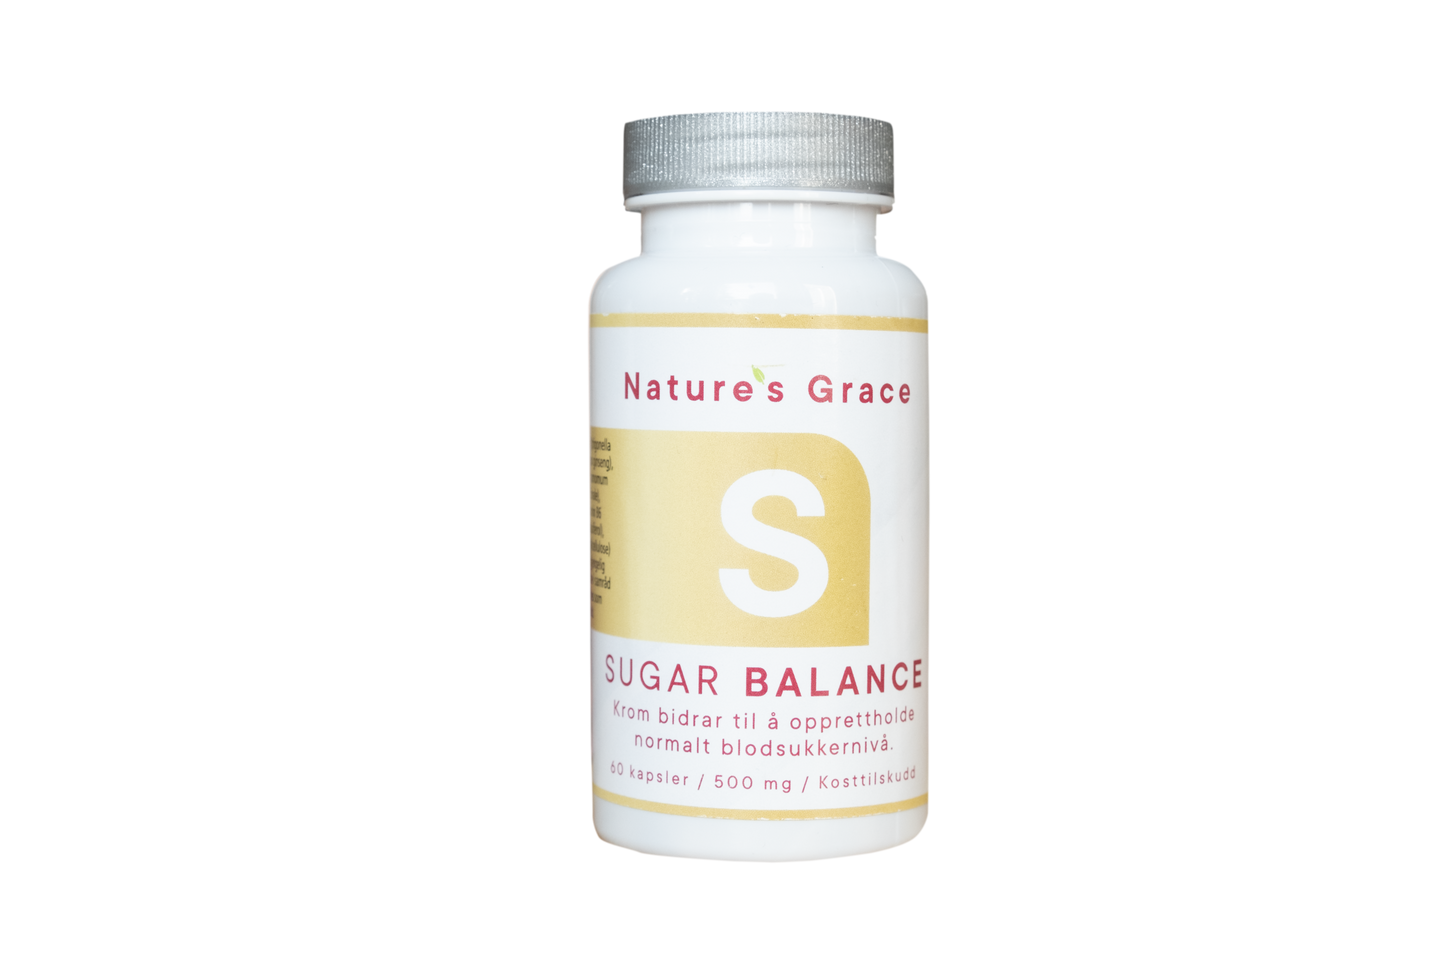 Nature's Grace Sugar Balance